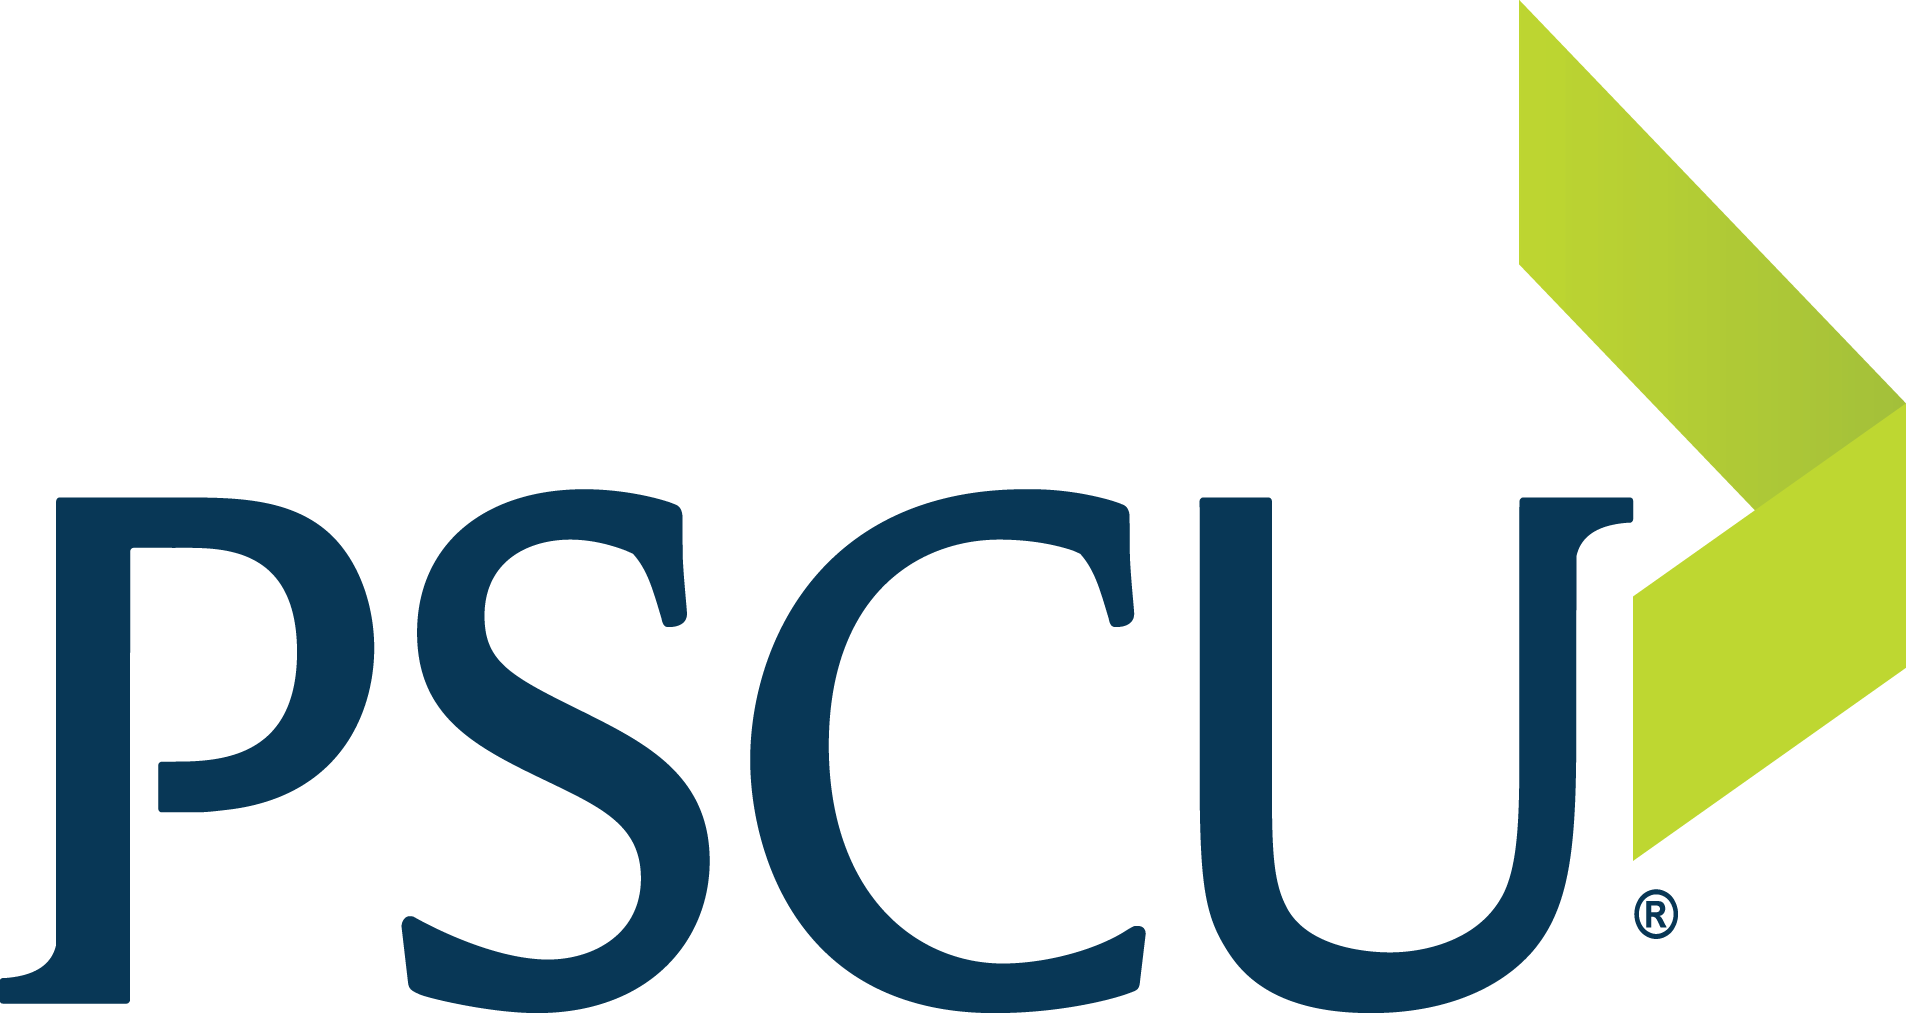 PSCU Logo Color